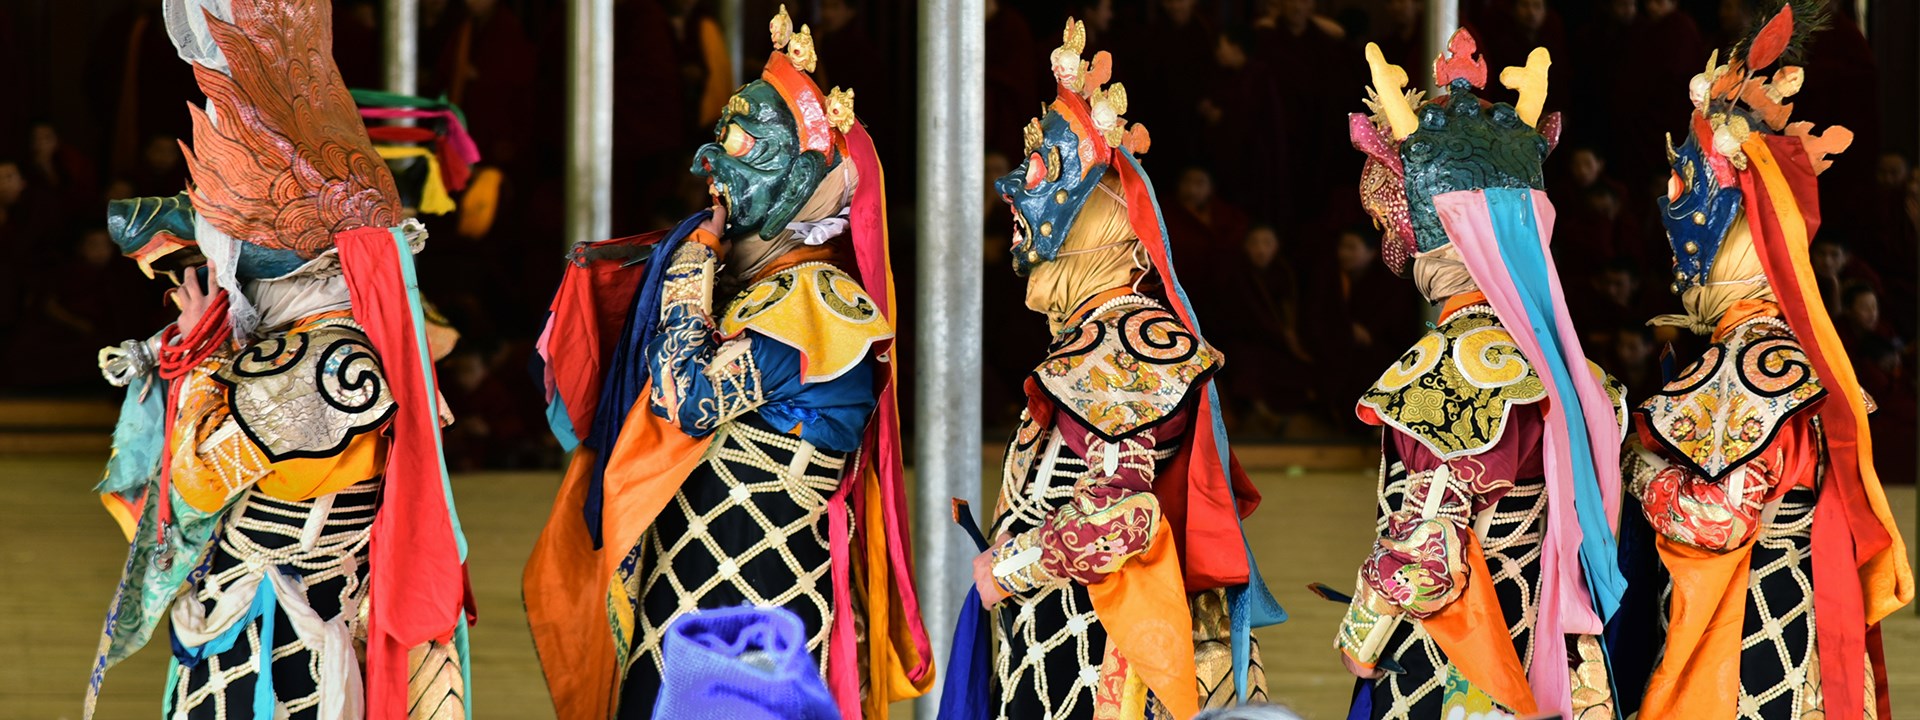 Monlam Festival (New Year's Festival, Losar) in Aba